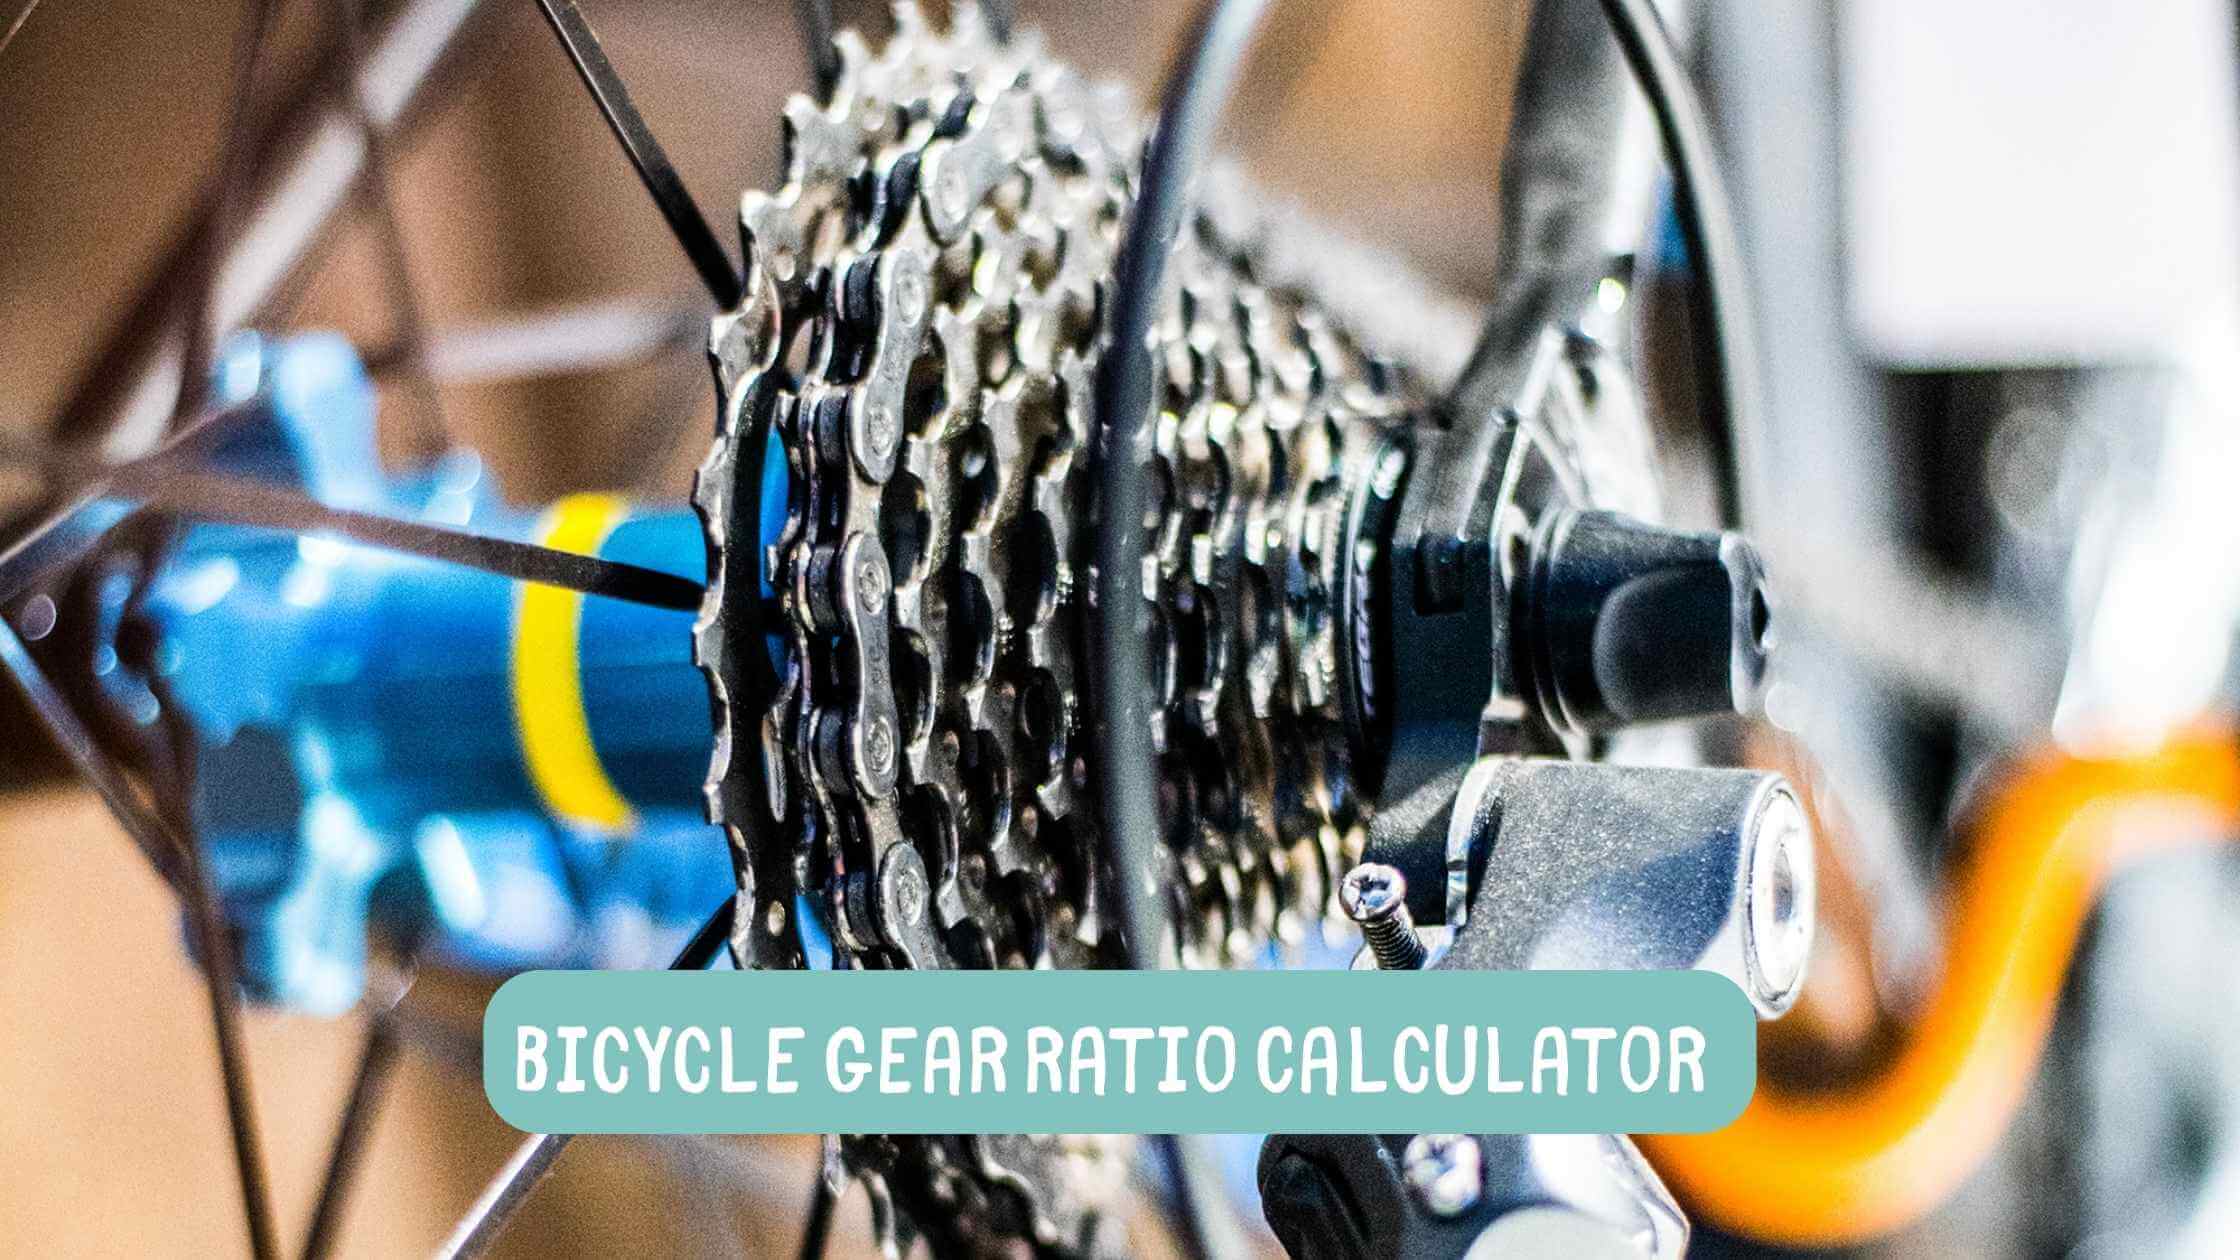 Bicycle Gear Ratio Calculator